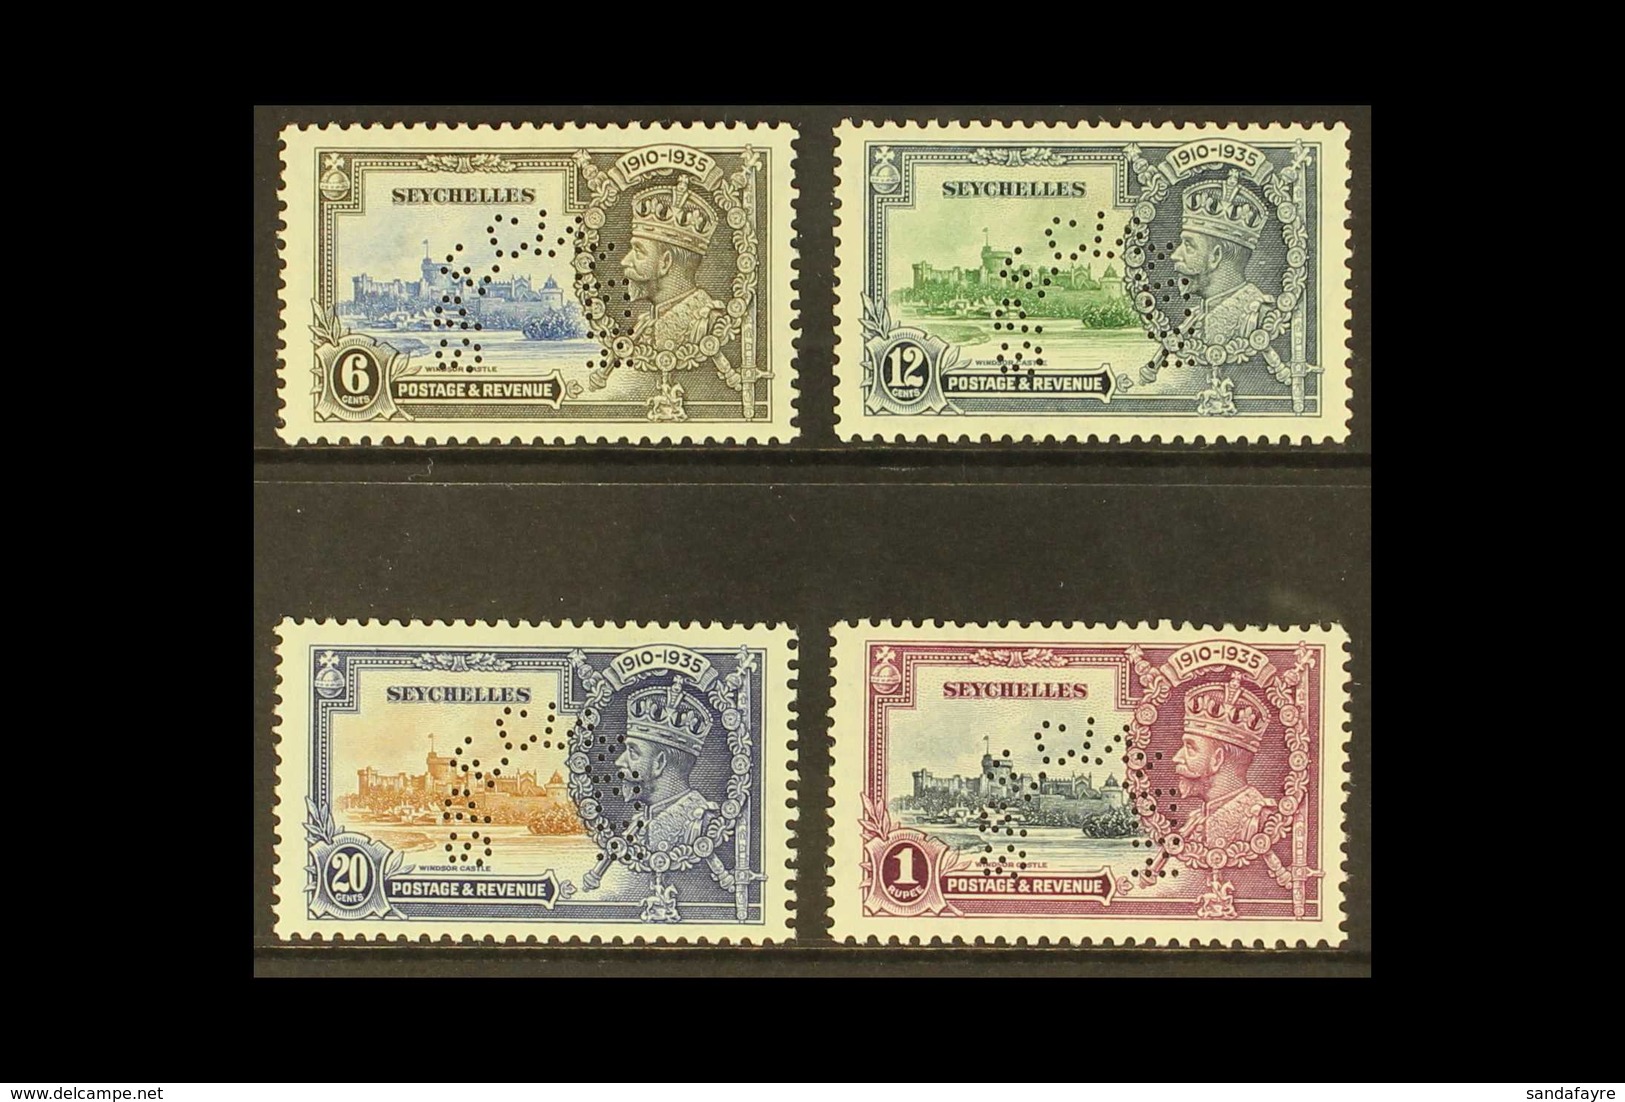 1935 Silver Jubilee Set, Perf. "SPECIMEN", SG 128/131s, Fine Mint. (4 Stamps) For More Images, Please Visit Http://www.s - Seychellen (...-1976)